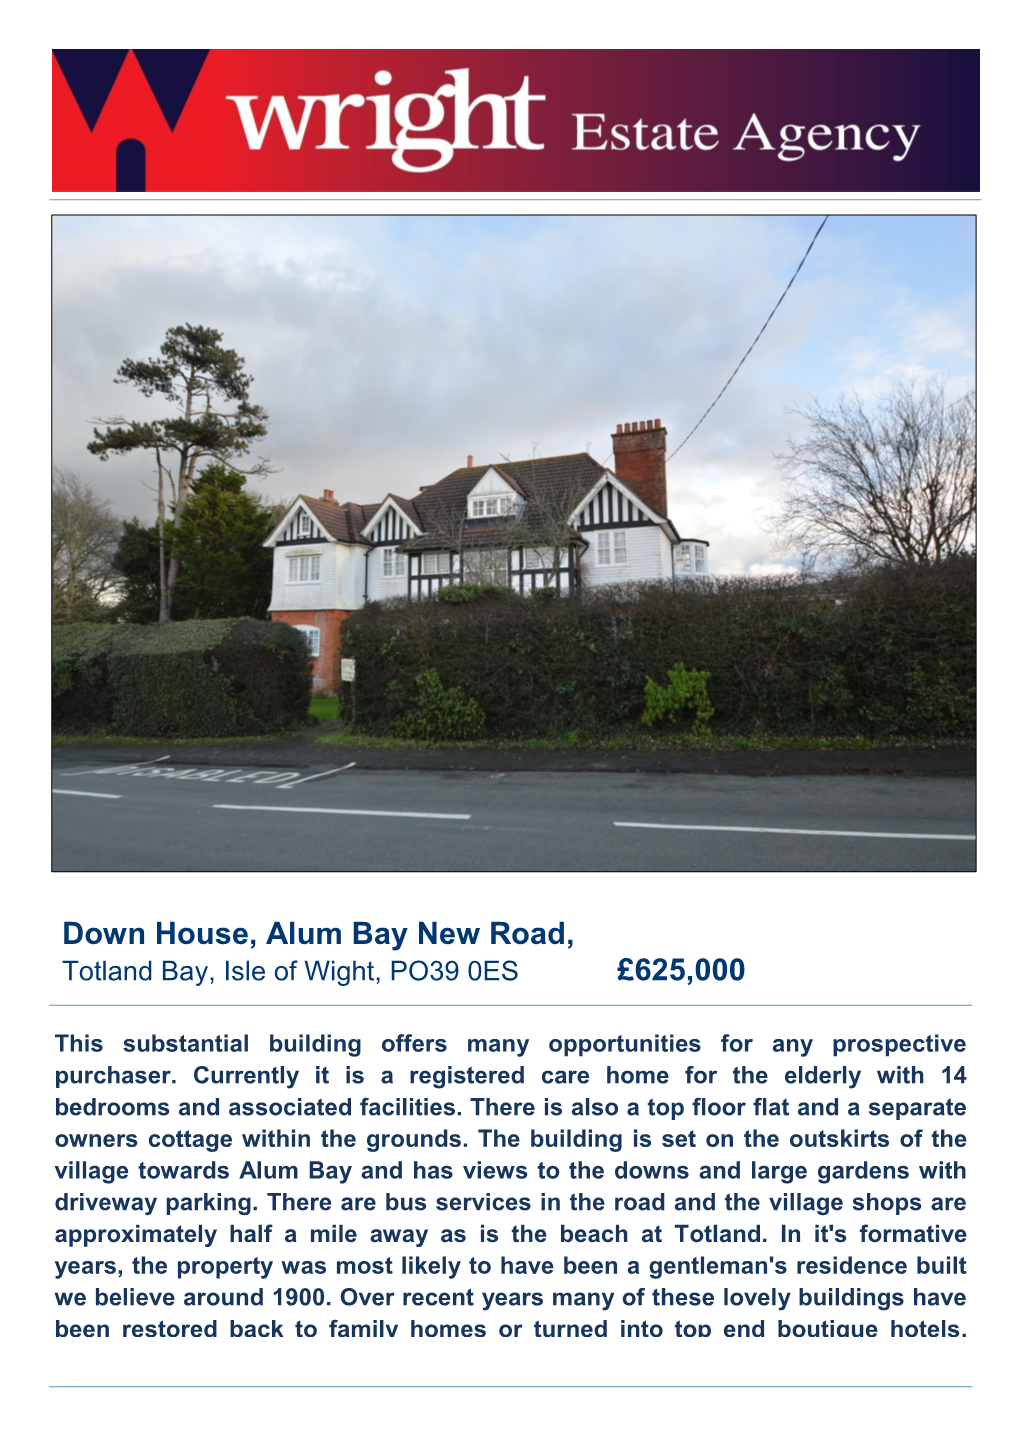 Down House, Alum Bay New Road, Totland Bay, Isle of Wight, PO39 0ES £625,000